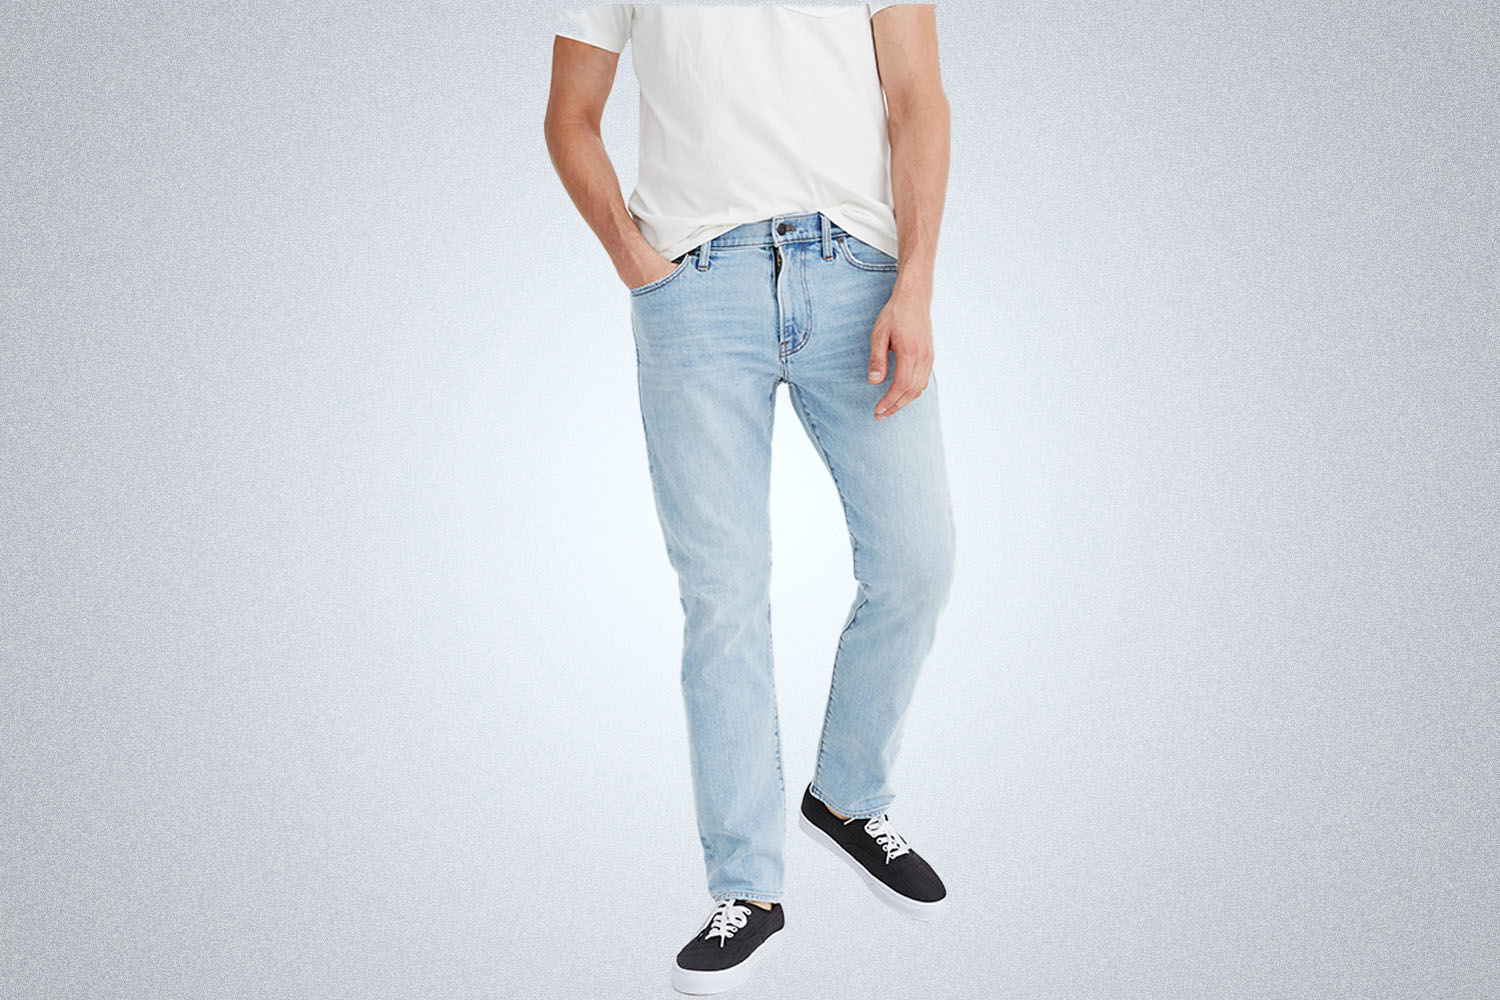 16 Most Comfortable Jeans for Men - InsideHook